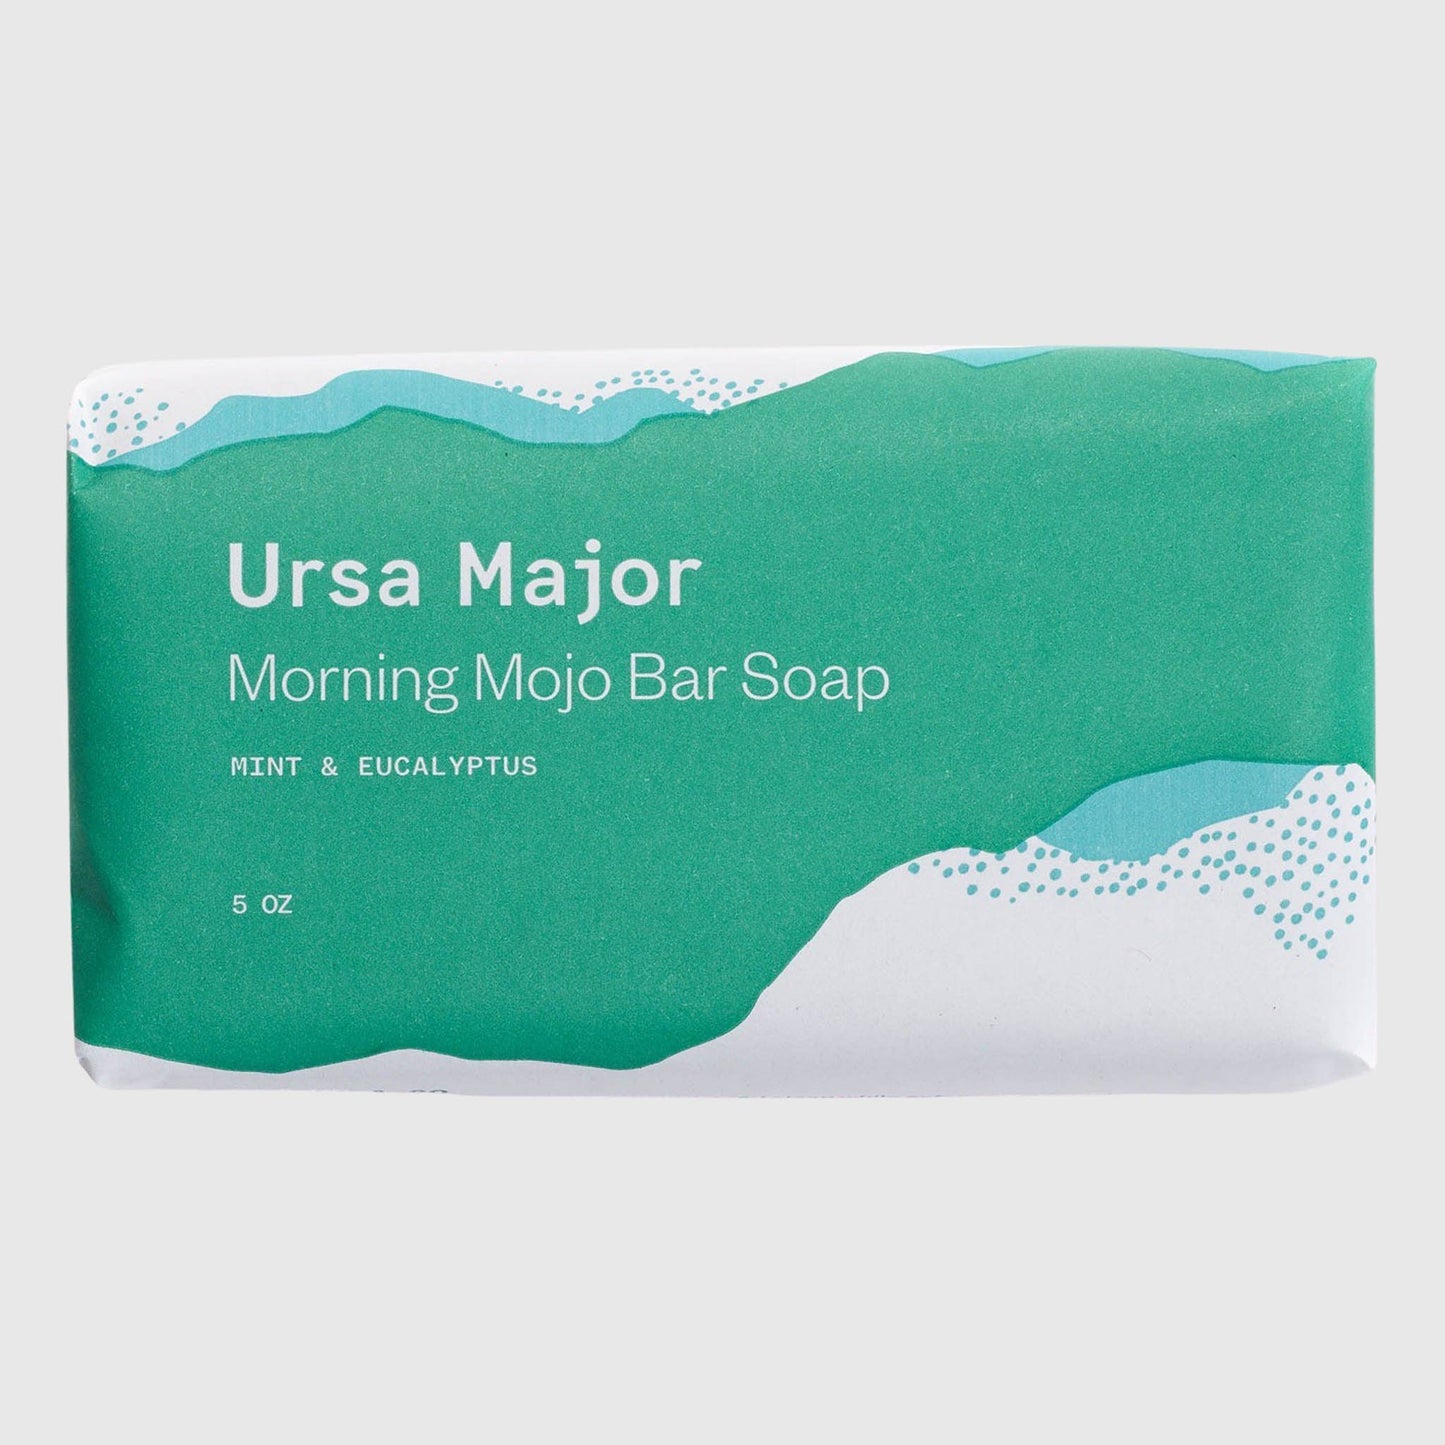 Ursa Major Morning Mojo Soap Bar Hand & Body Ursa Major 